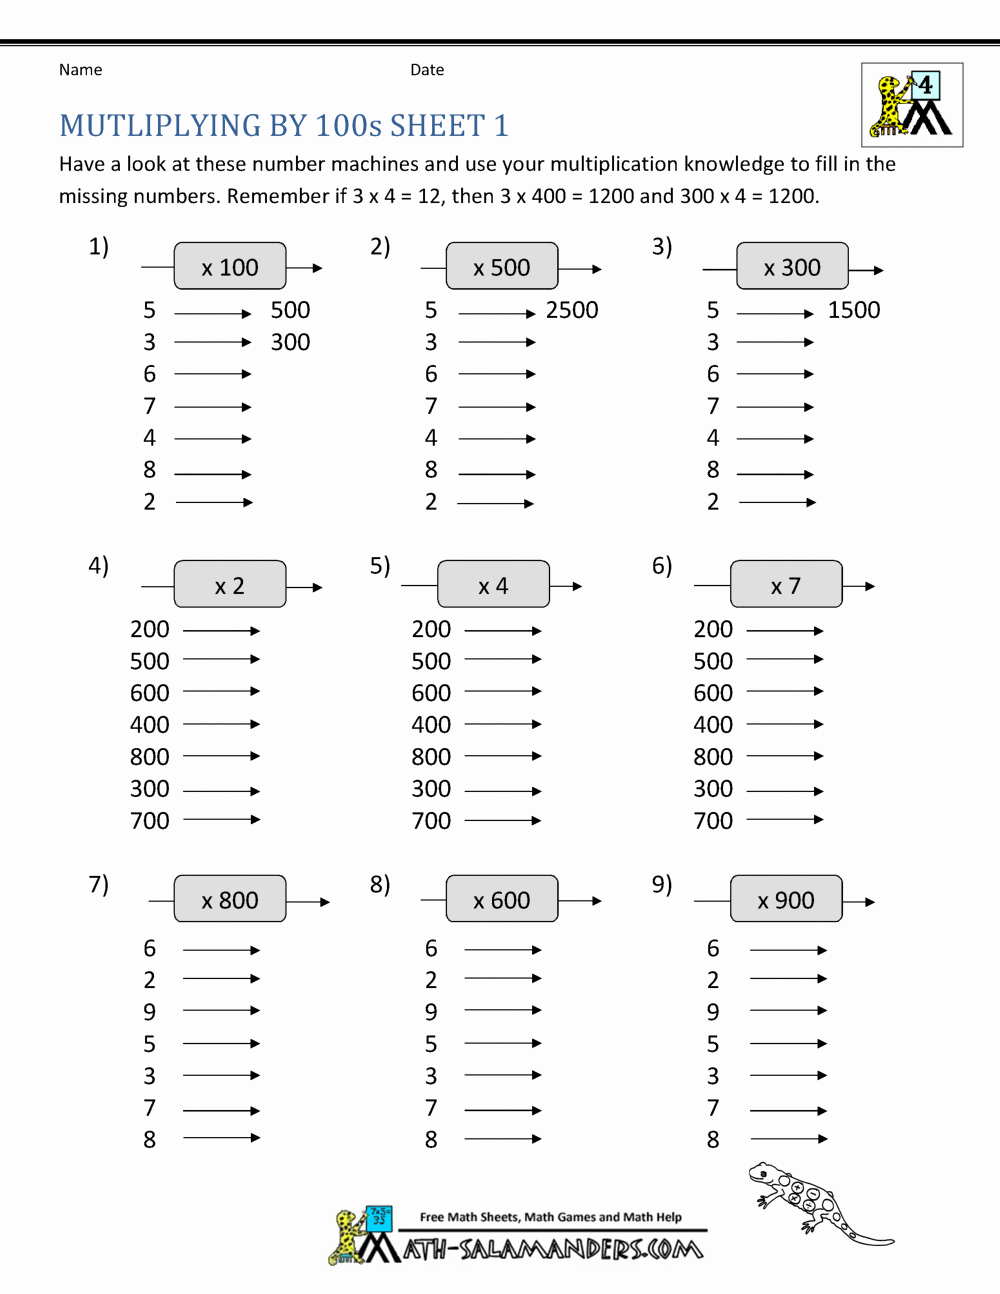 Multiplication Facts Worksheet Generator Fresh Multiplication Drill Worksheet Generator